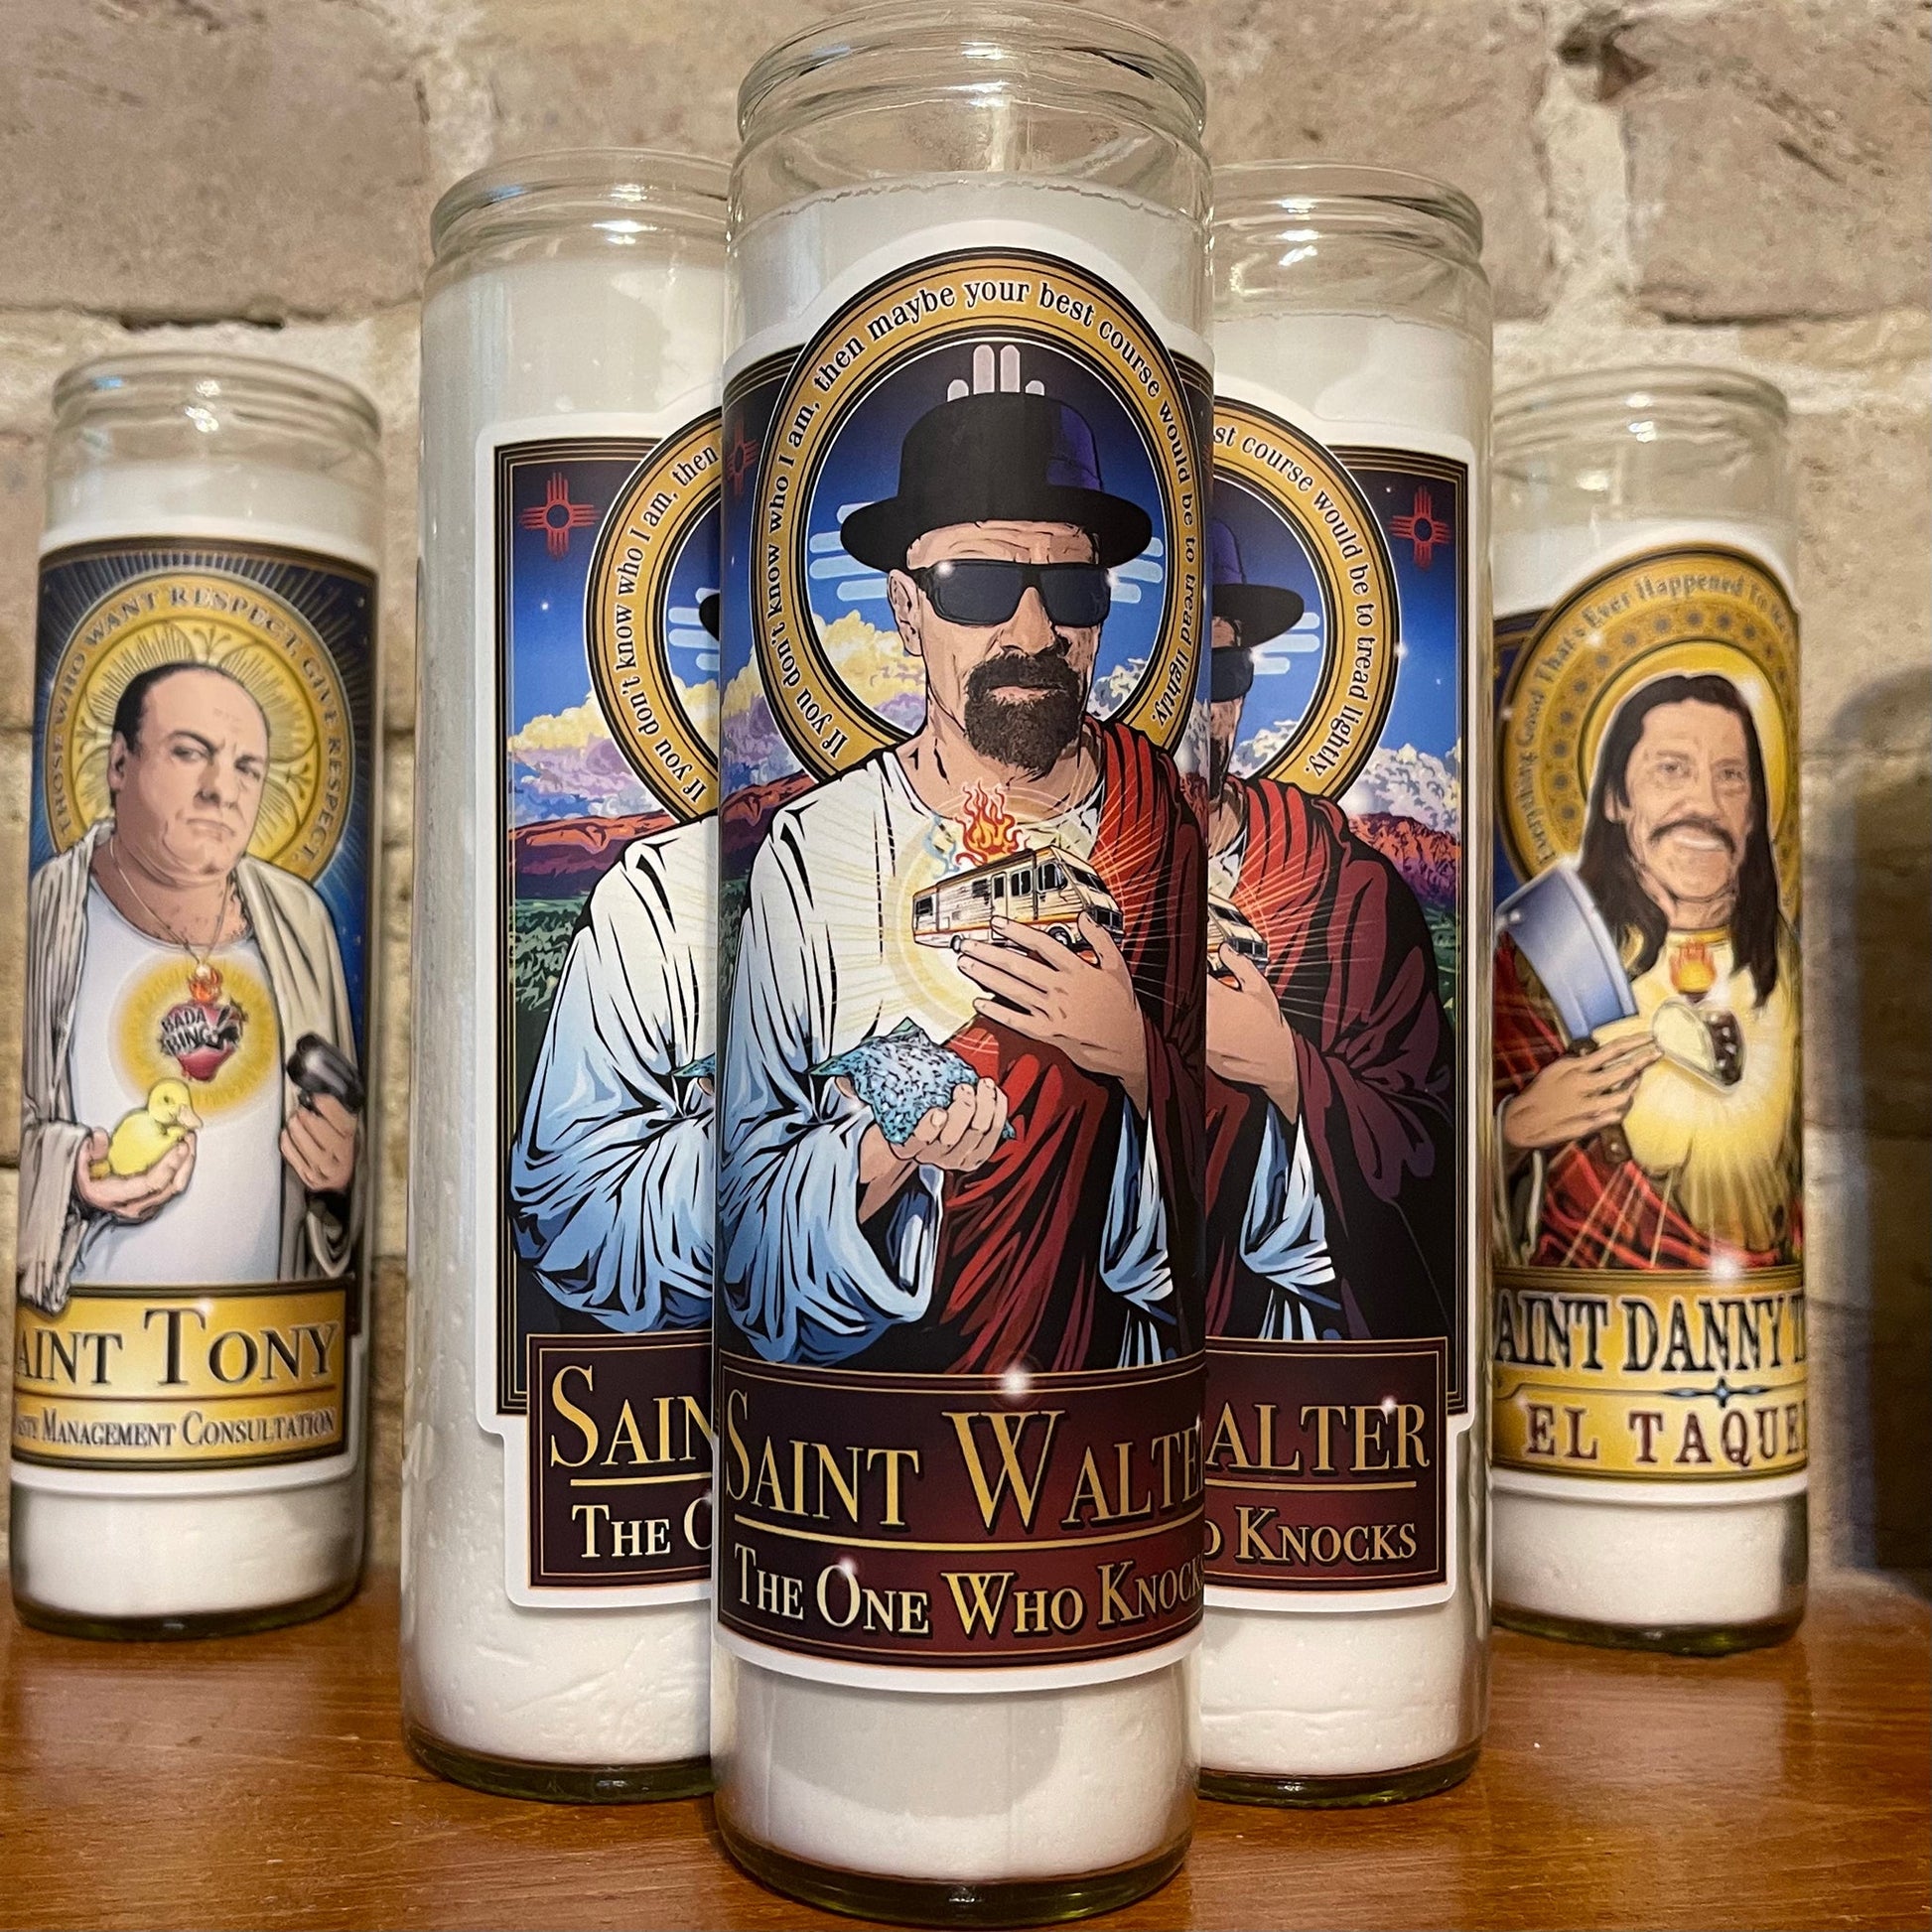 Saint Walter White The One Who Knocks Candle Cleaverandblade.com